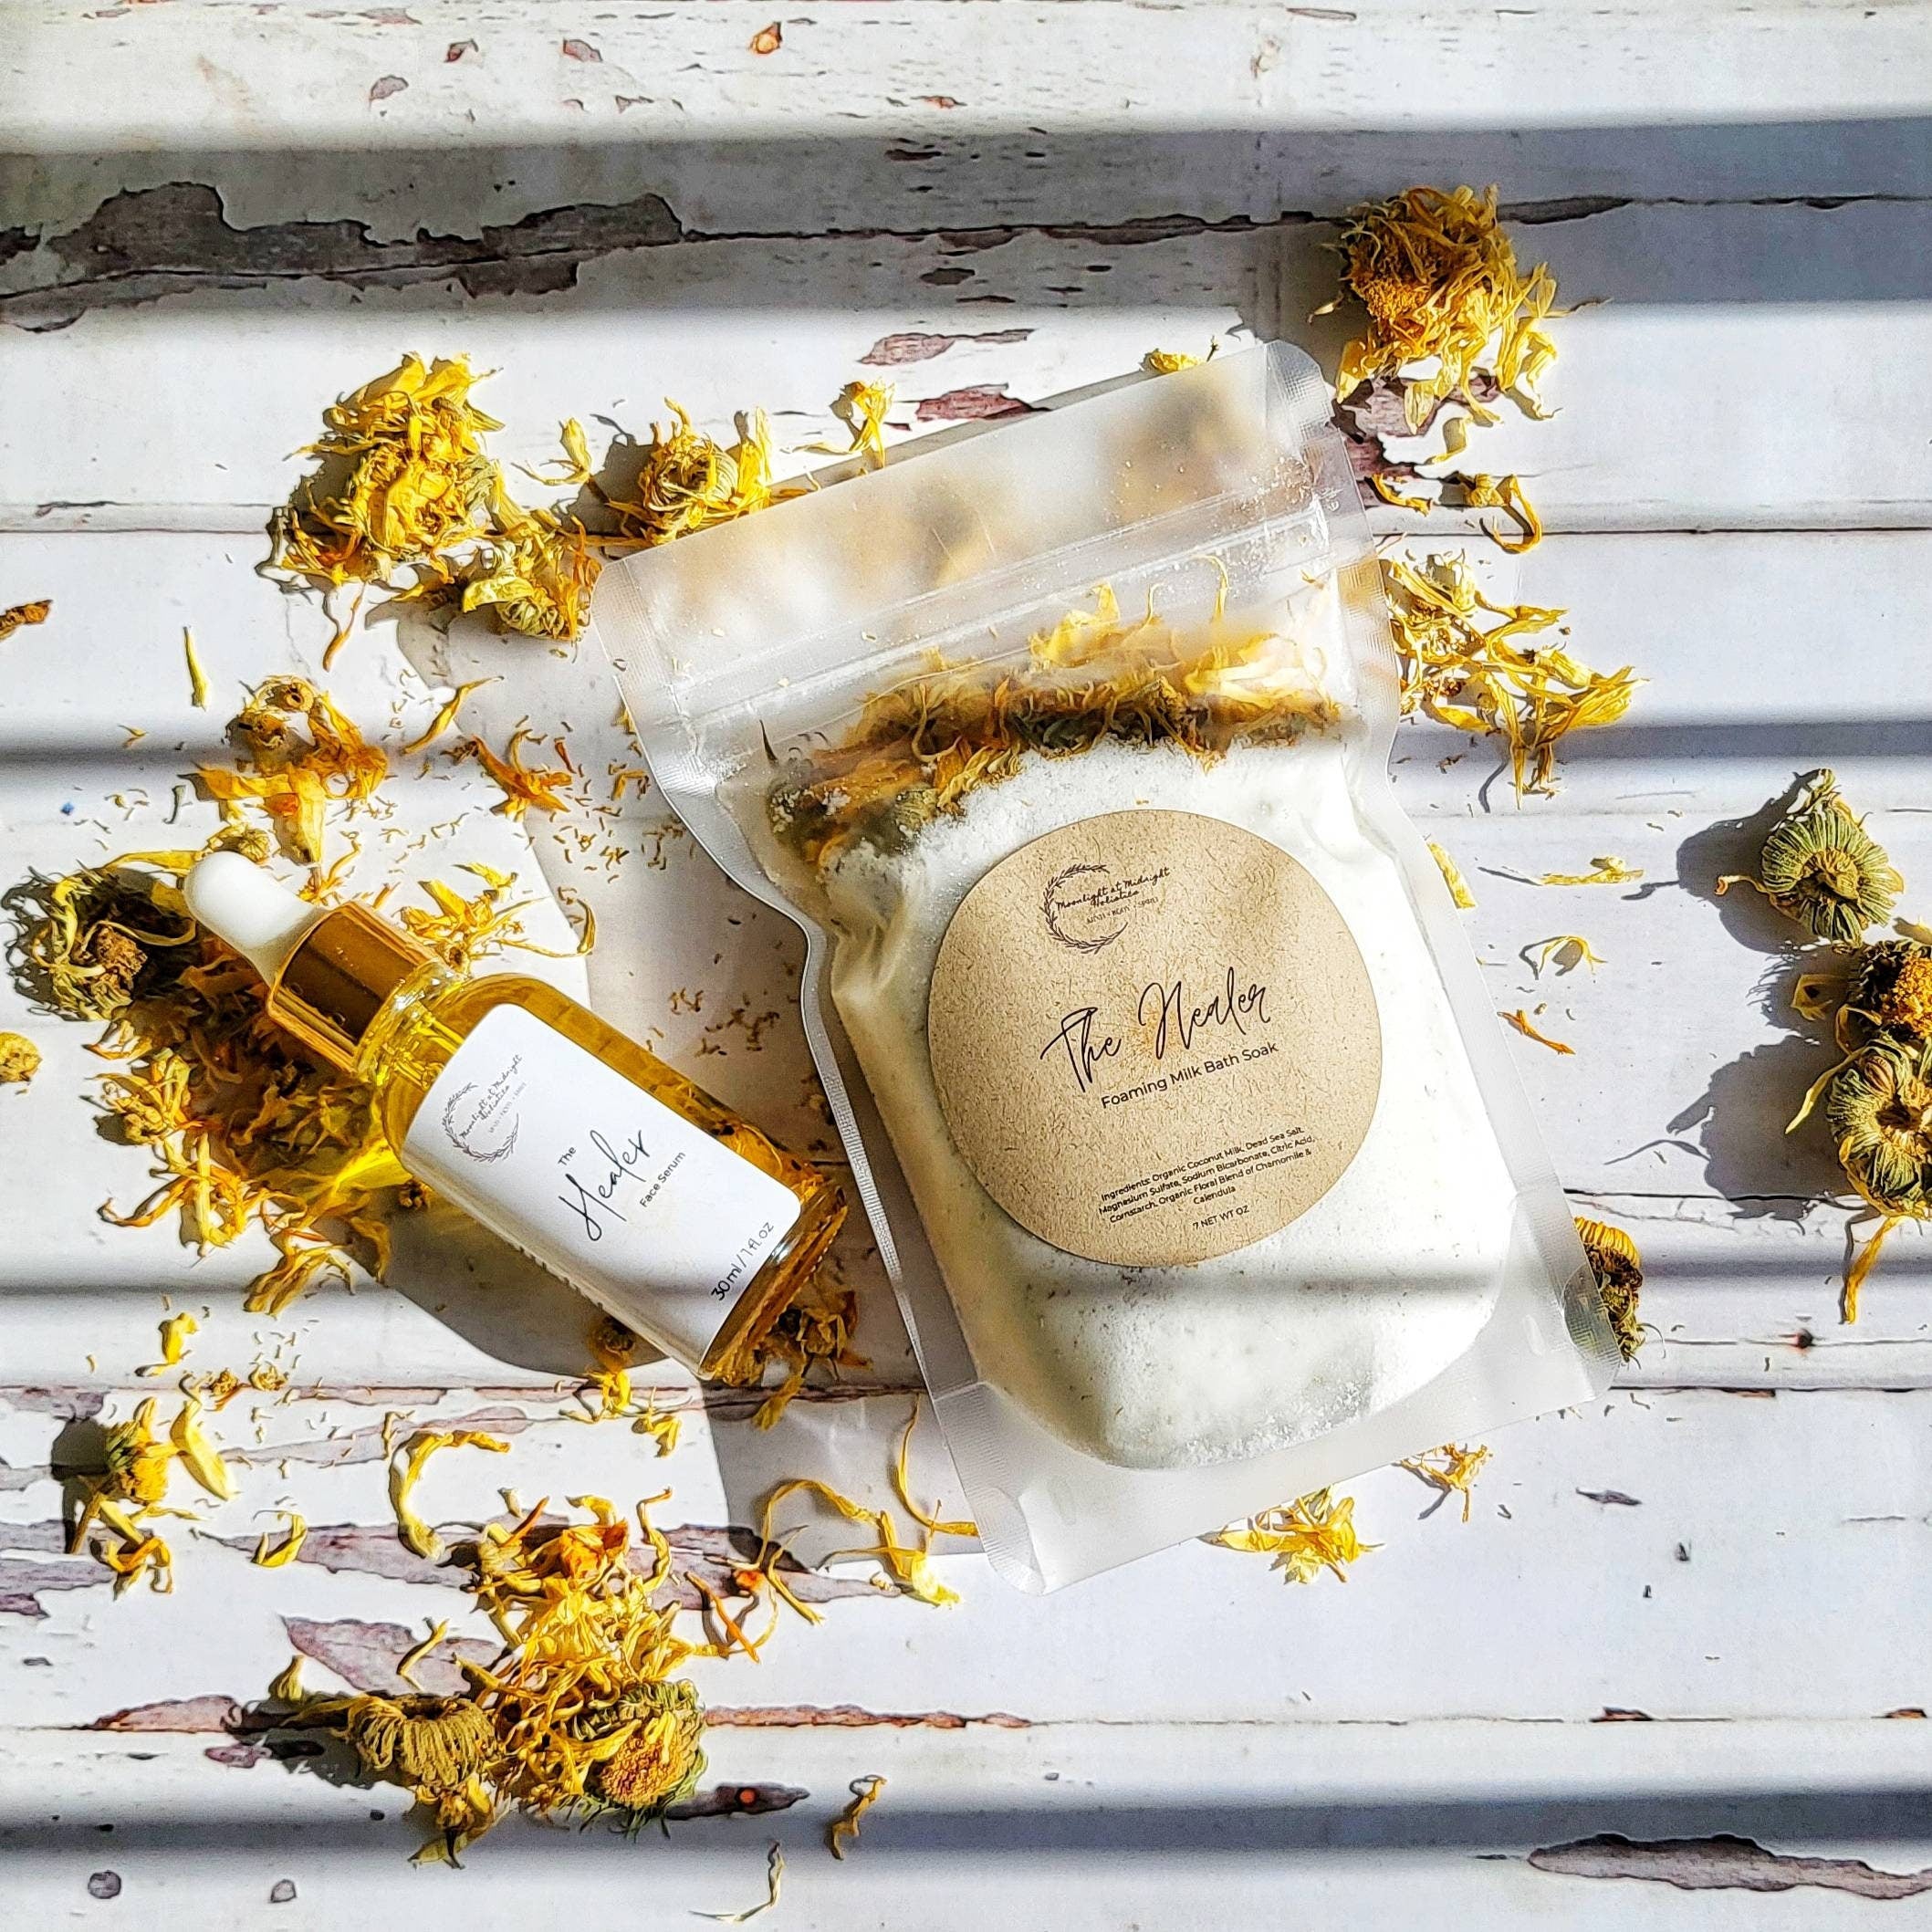 Organic Skin Care Gift Box | Hemp Seed Oil Beauty Gifts